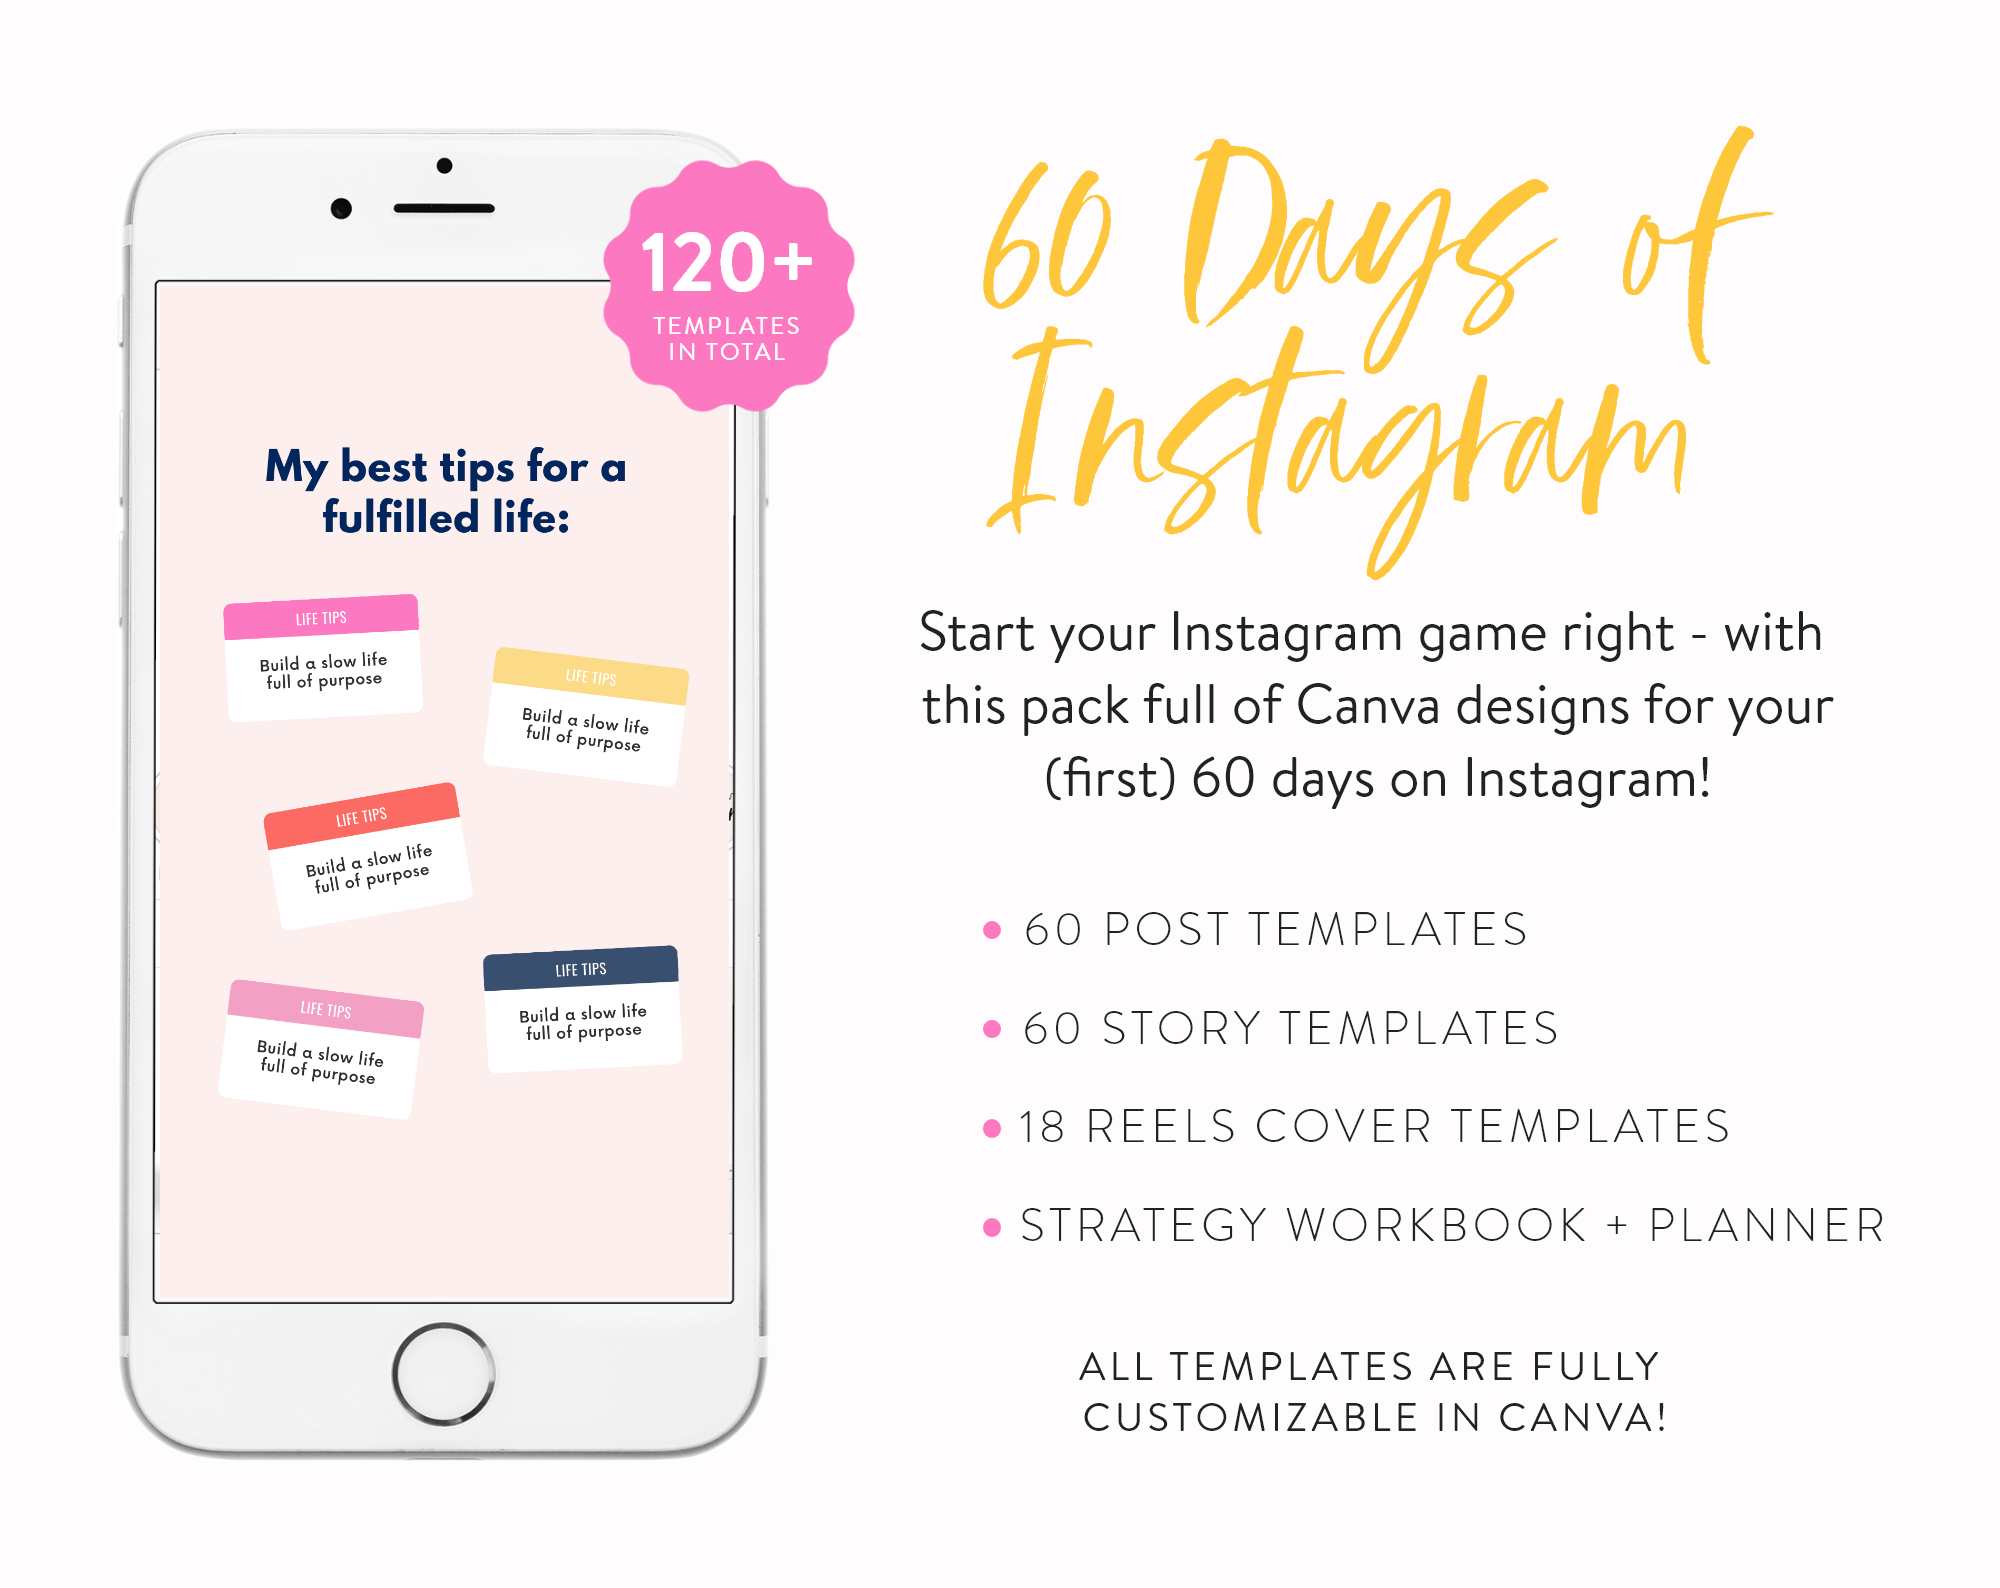 kickstart-your-Instagram-kit-for-canva-120-templates